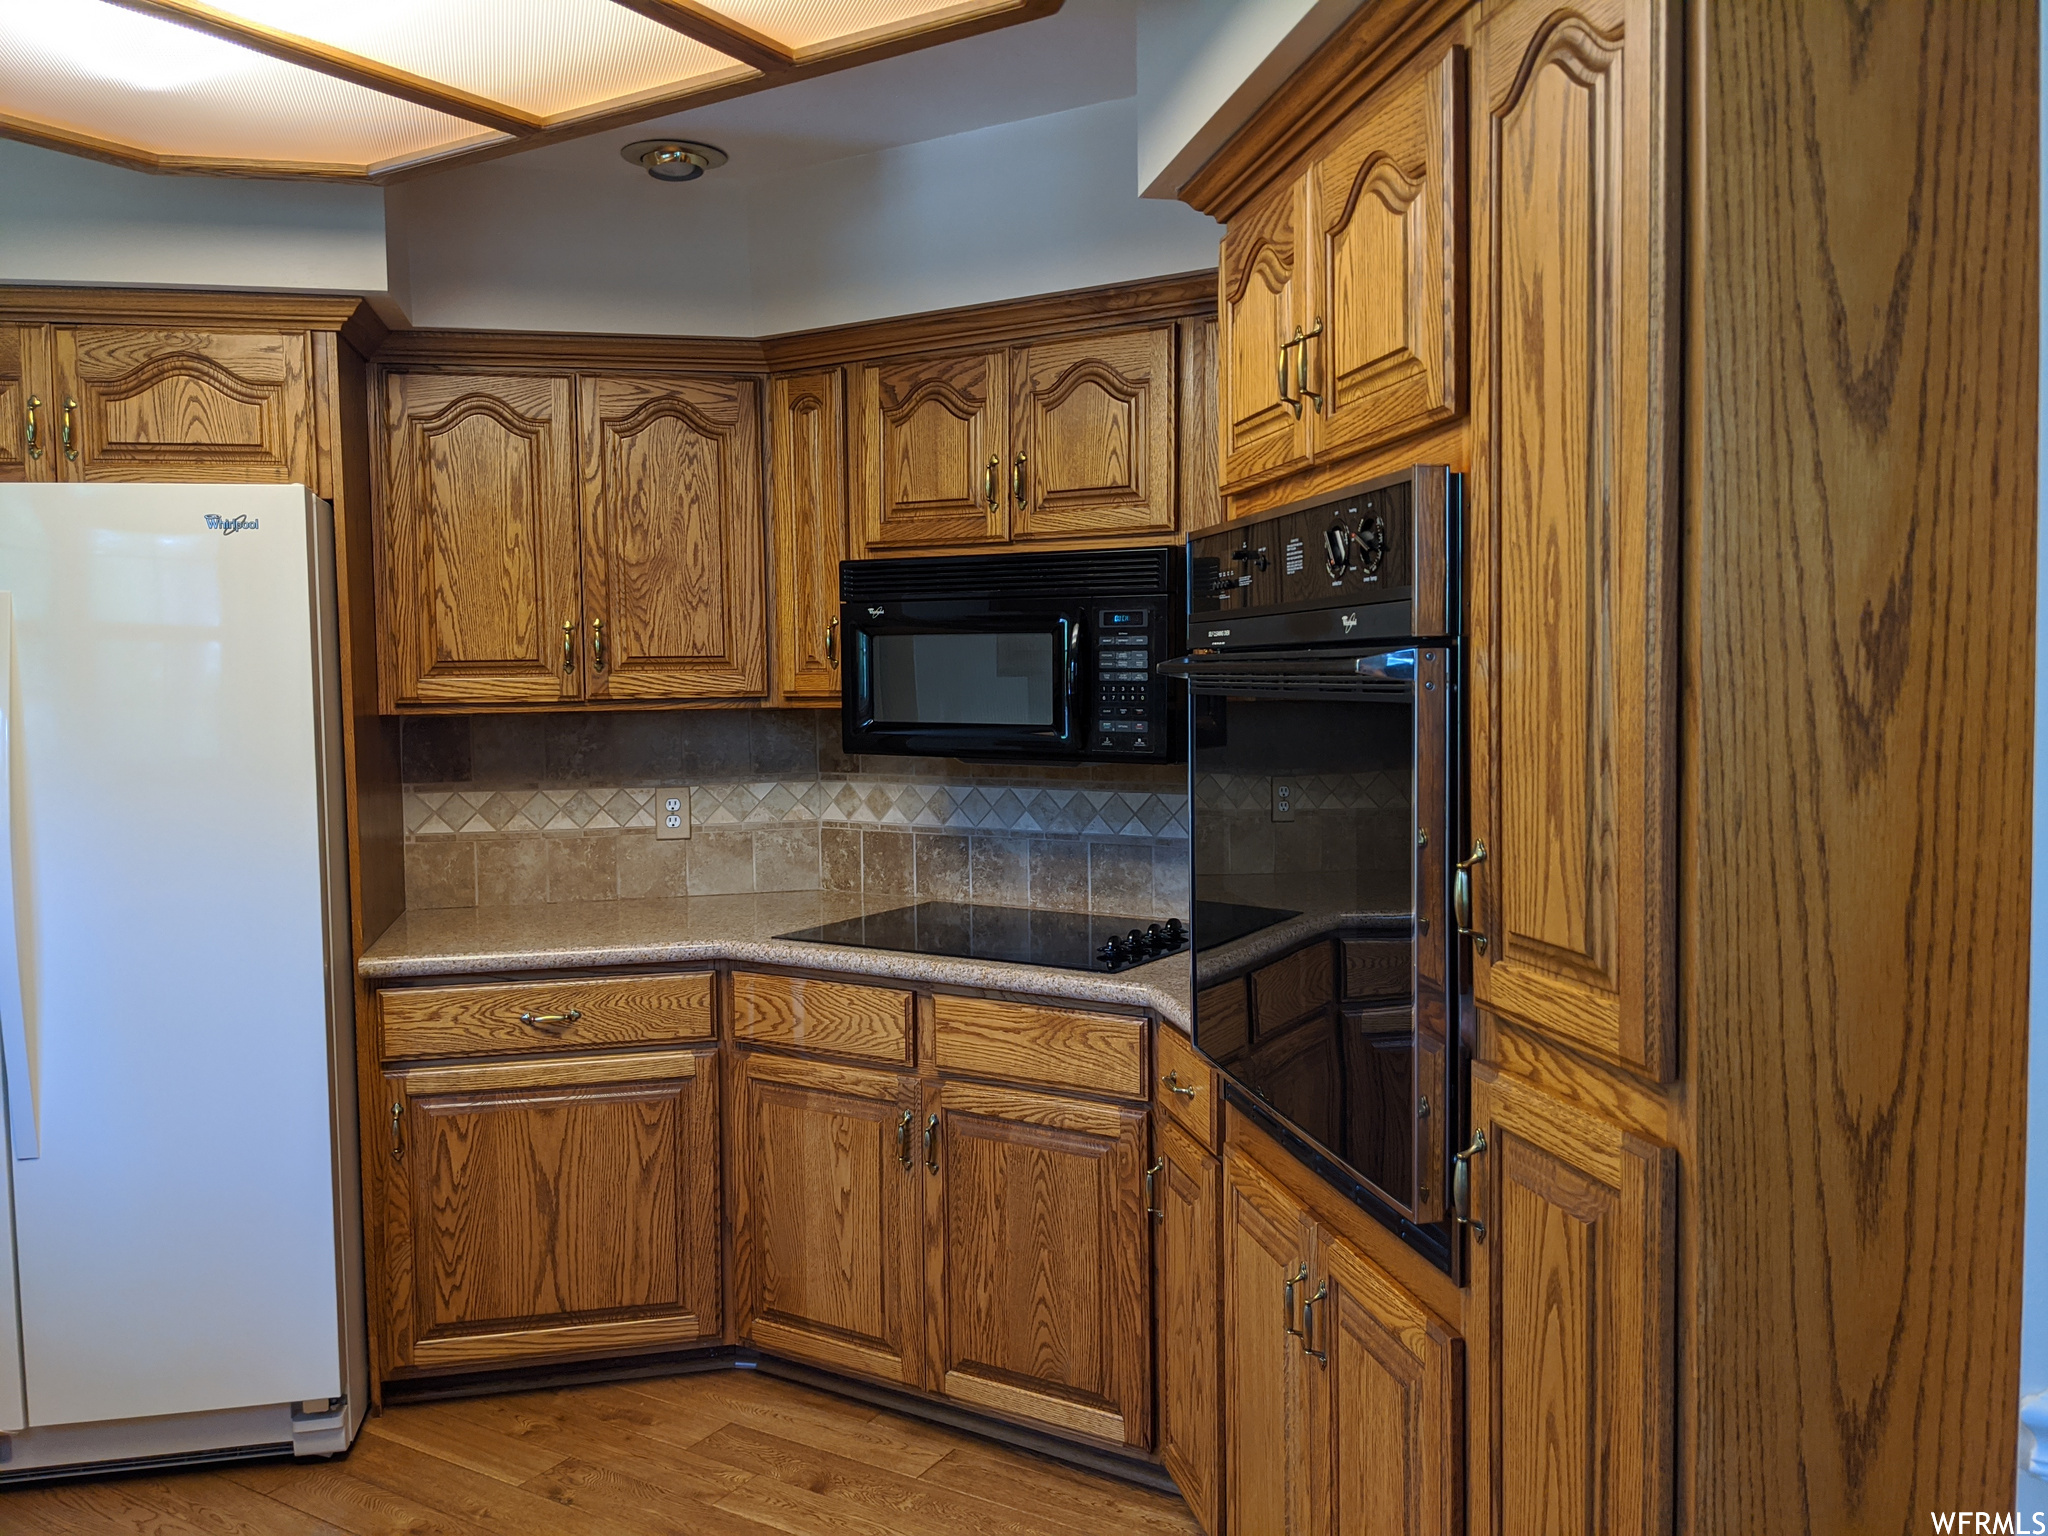 Kitchen featuring brown cabinets, light hardwood floors, backsplash, and black appliances